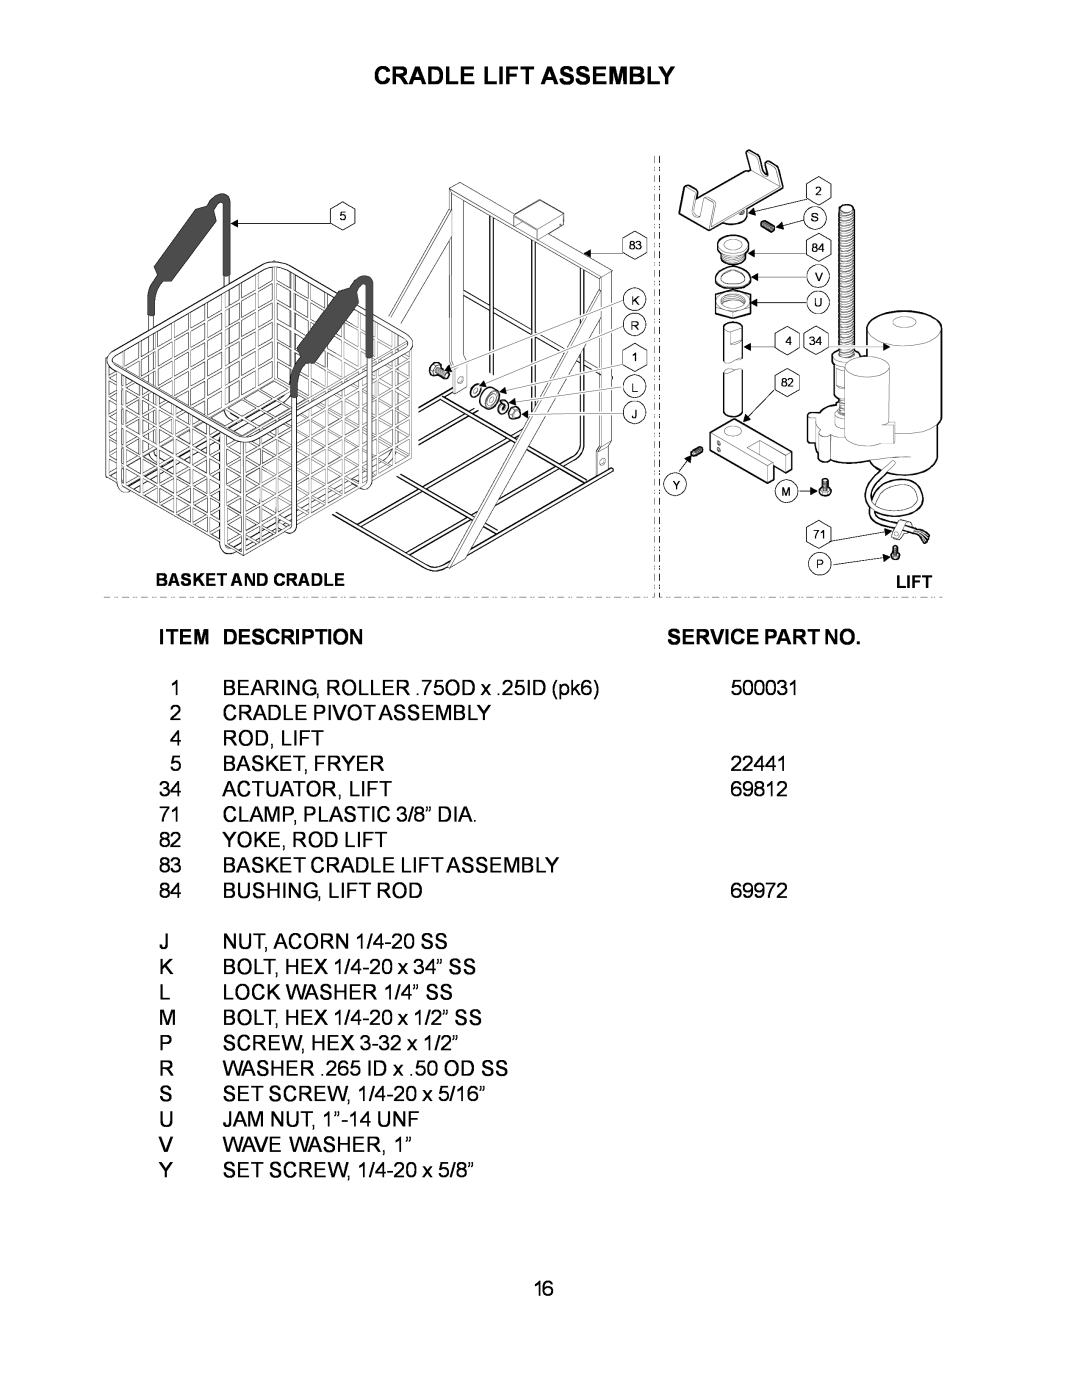 Wells WFGA-60FS service manual Cradle Lift Assembly 